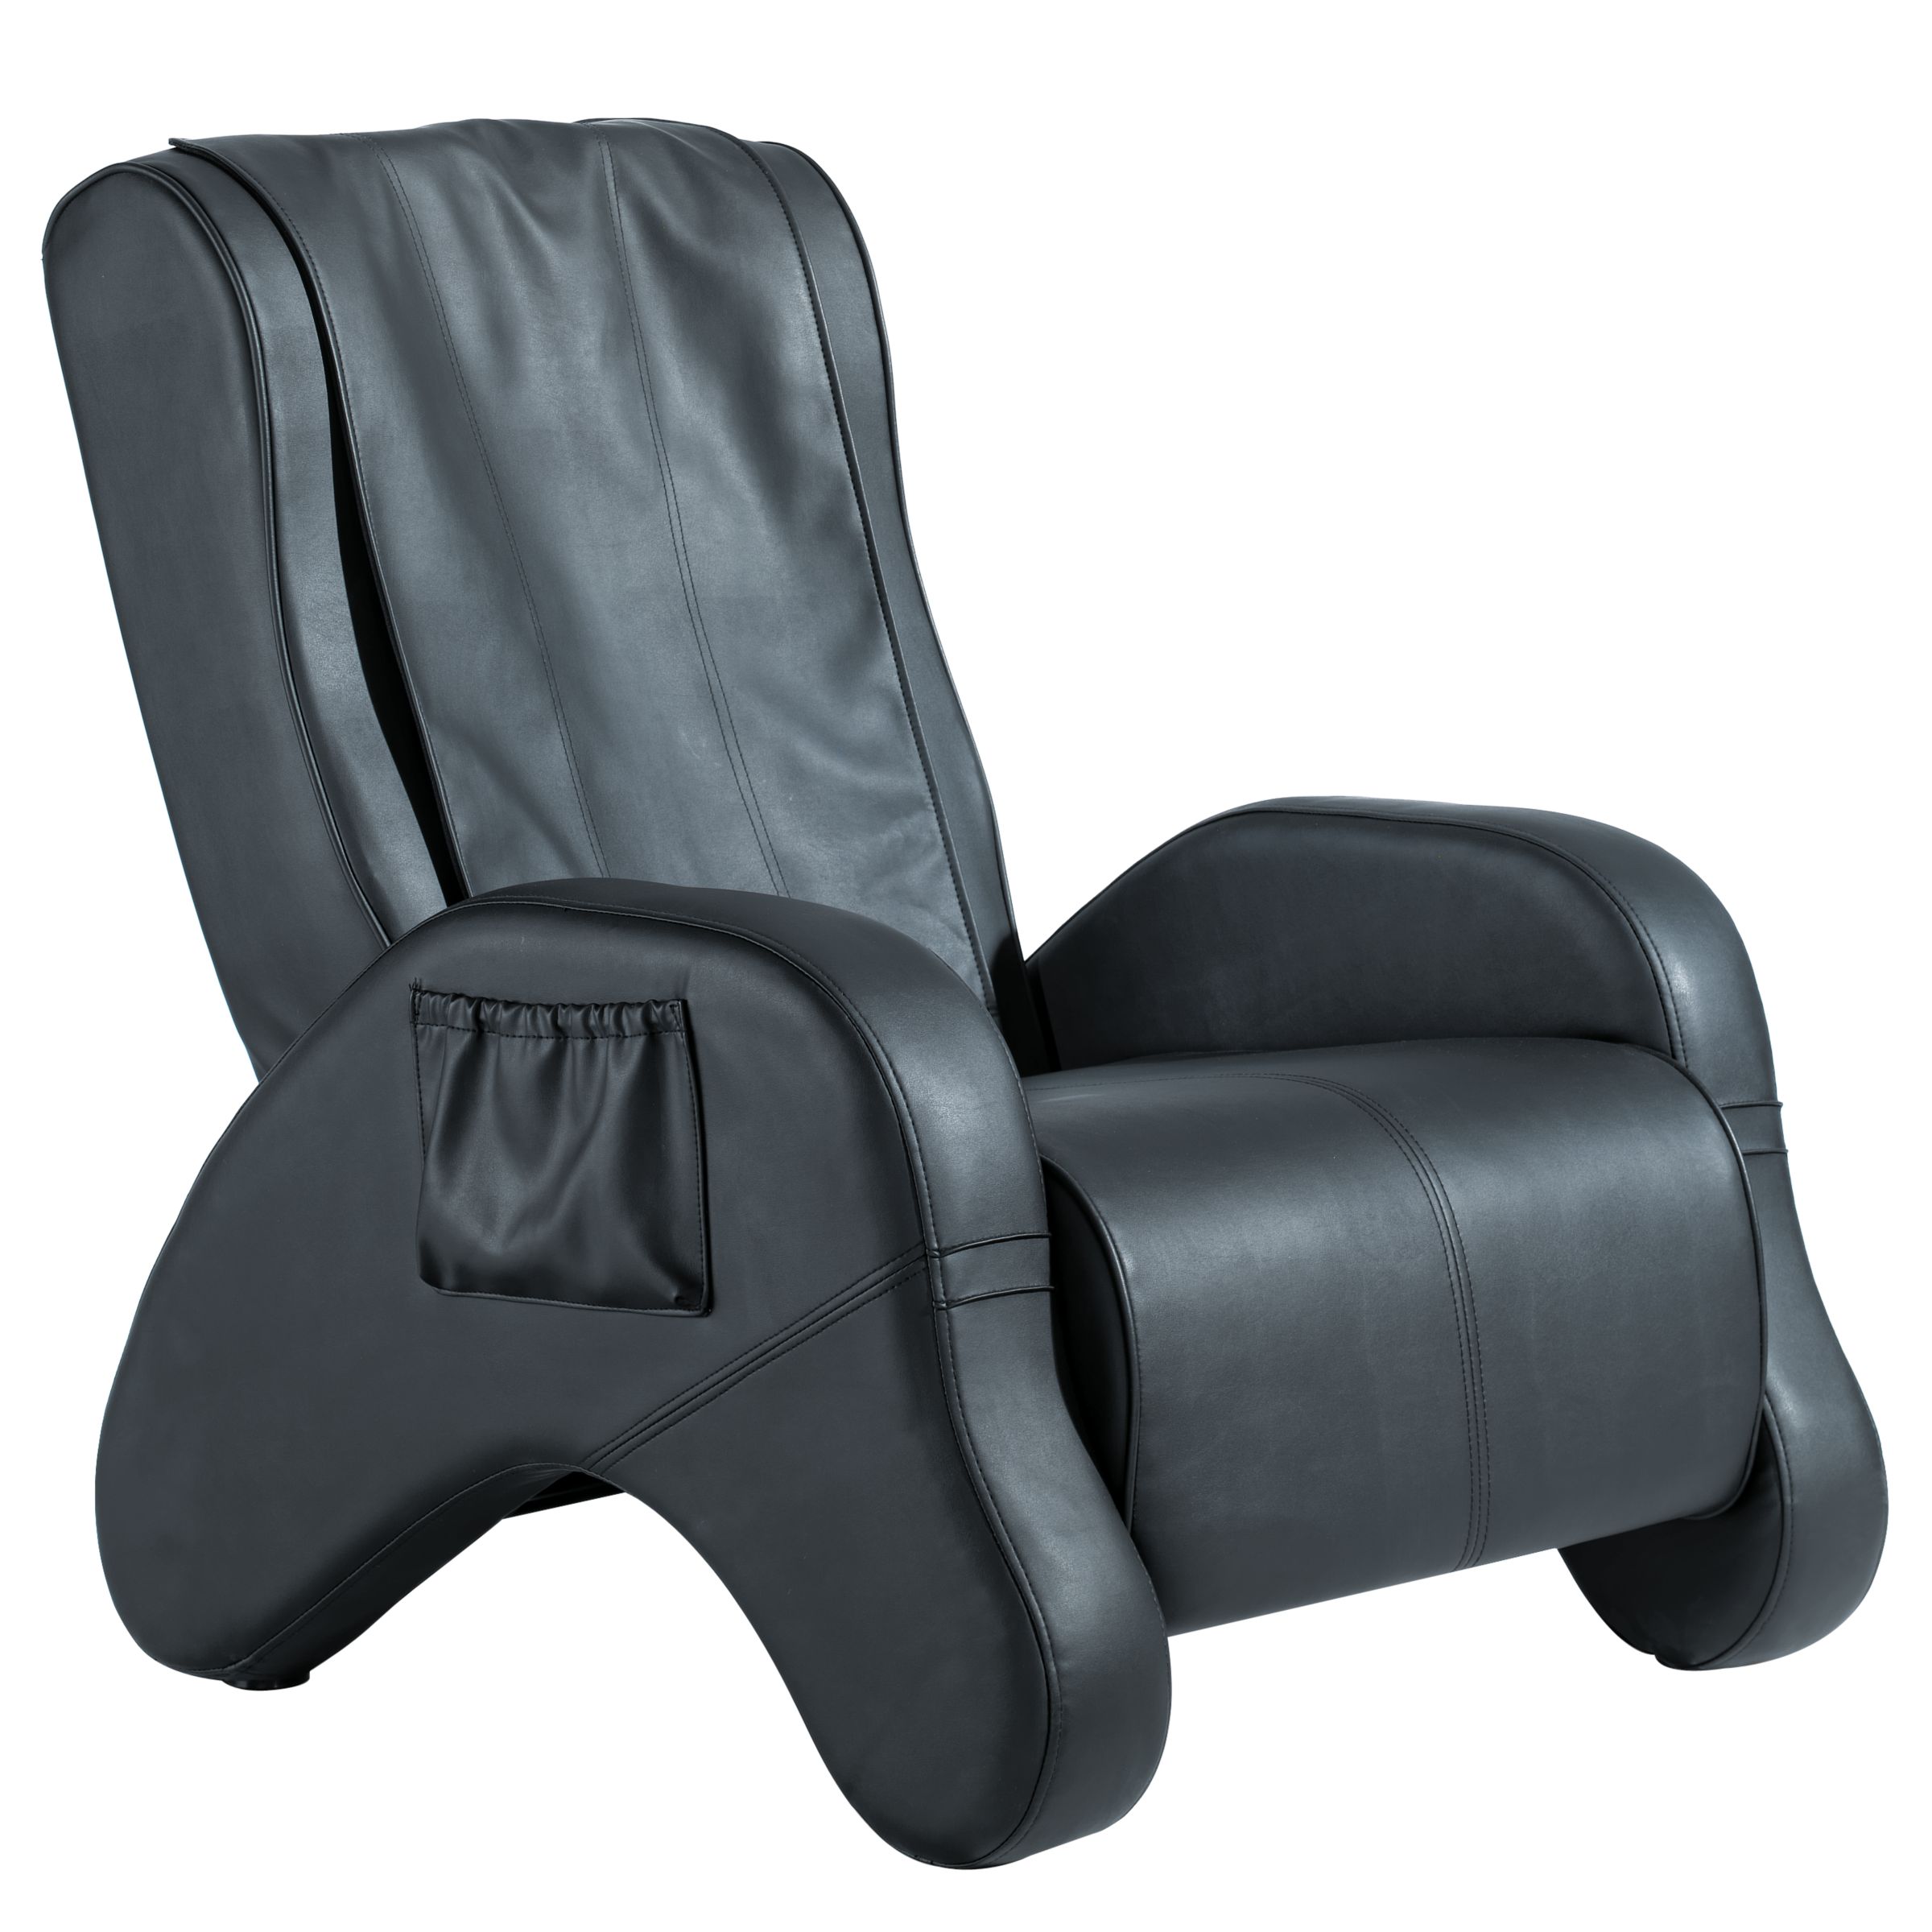 Inner Balance MC710 Massage Chair at John Lewis